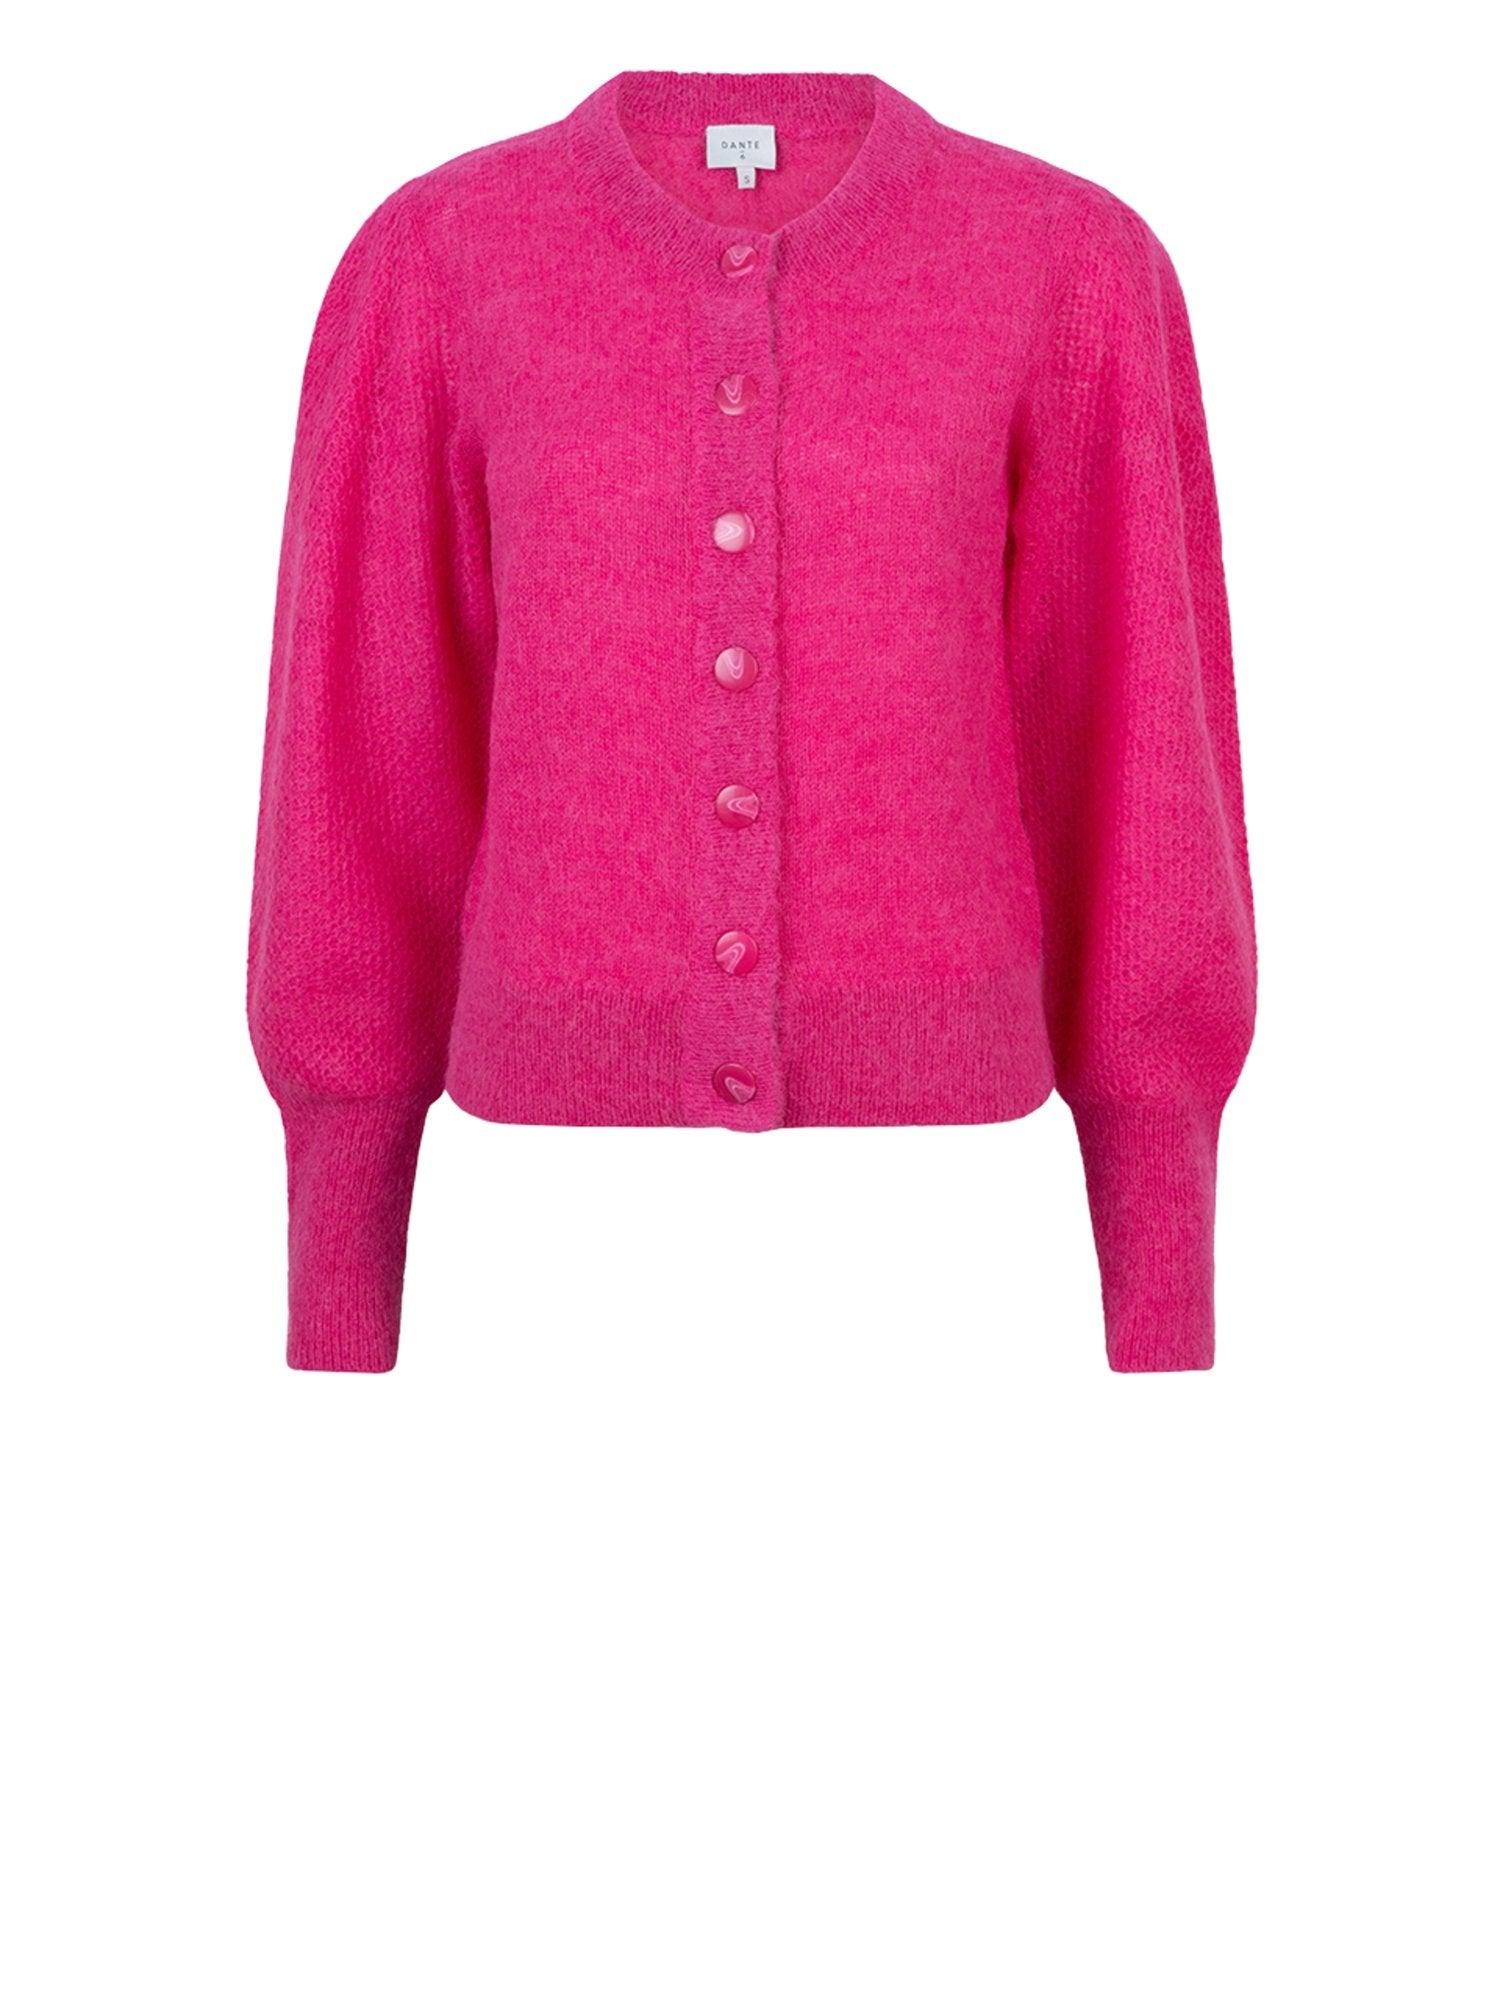 Handsome Mixed Knit Cardigan Pink Energy - No22 Damplassen